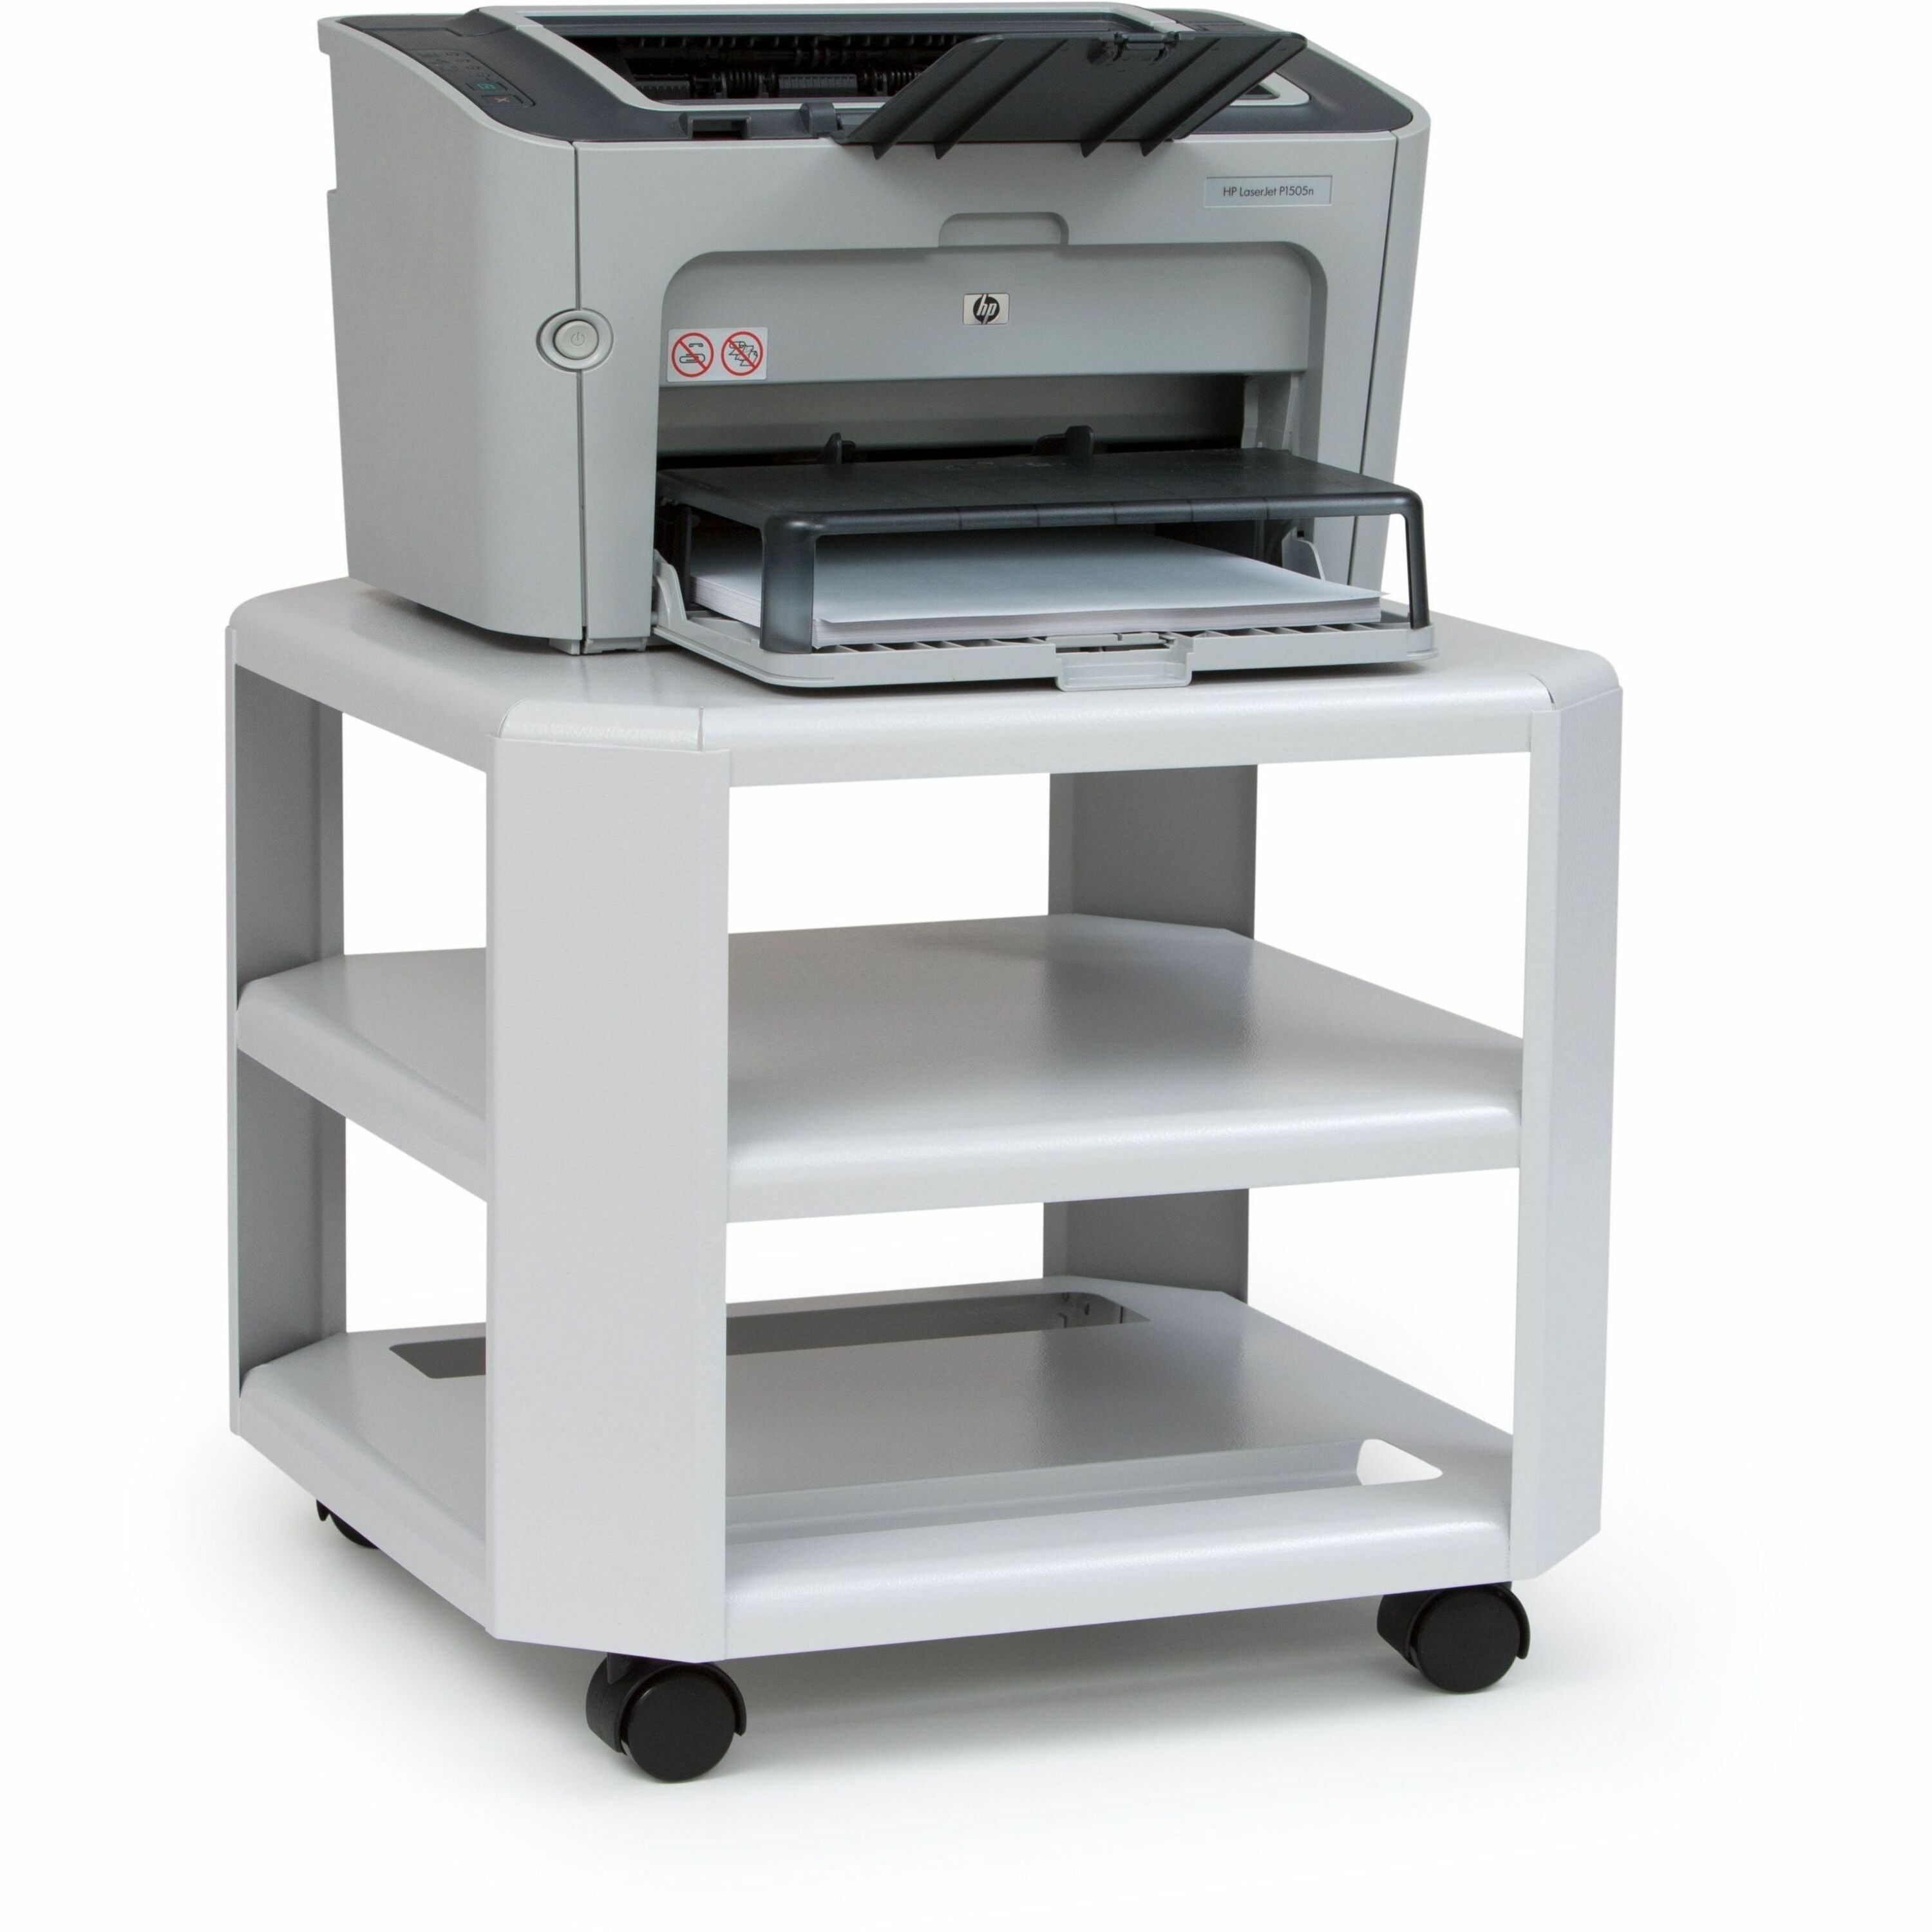 Master Mobile Printer Stand - 75 lb Load Capacity - 2 x Shelf(ves) - 8.5" Height x 18" Width x 18" Depth - Floor - Steel - Gray - 